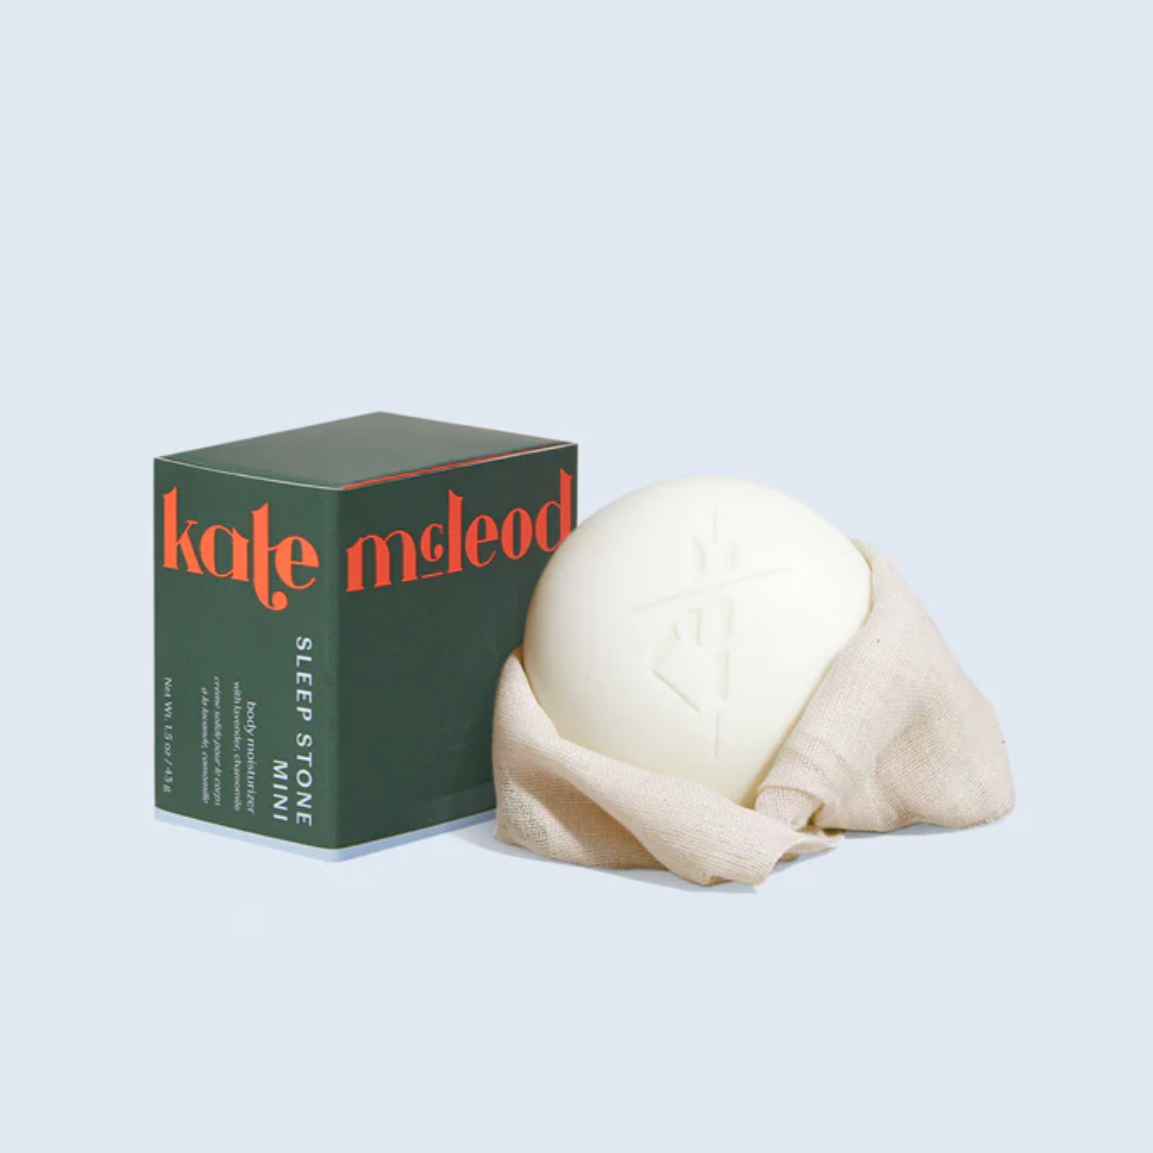 Kate Mcleod Sleep Stone Lotion Bar